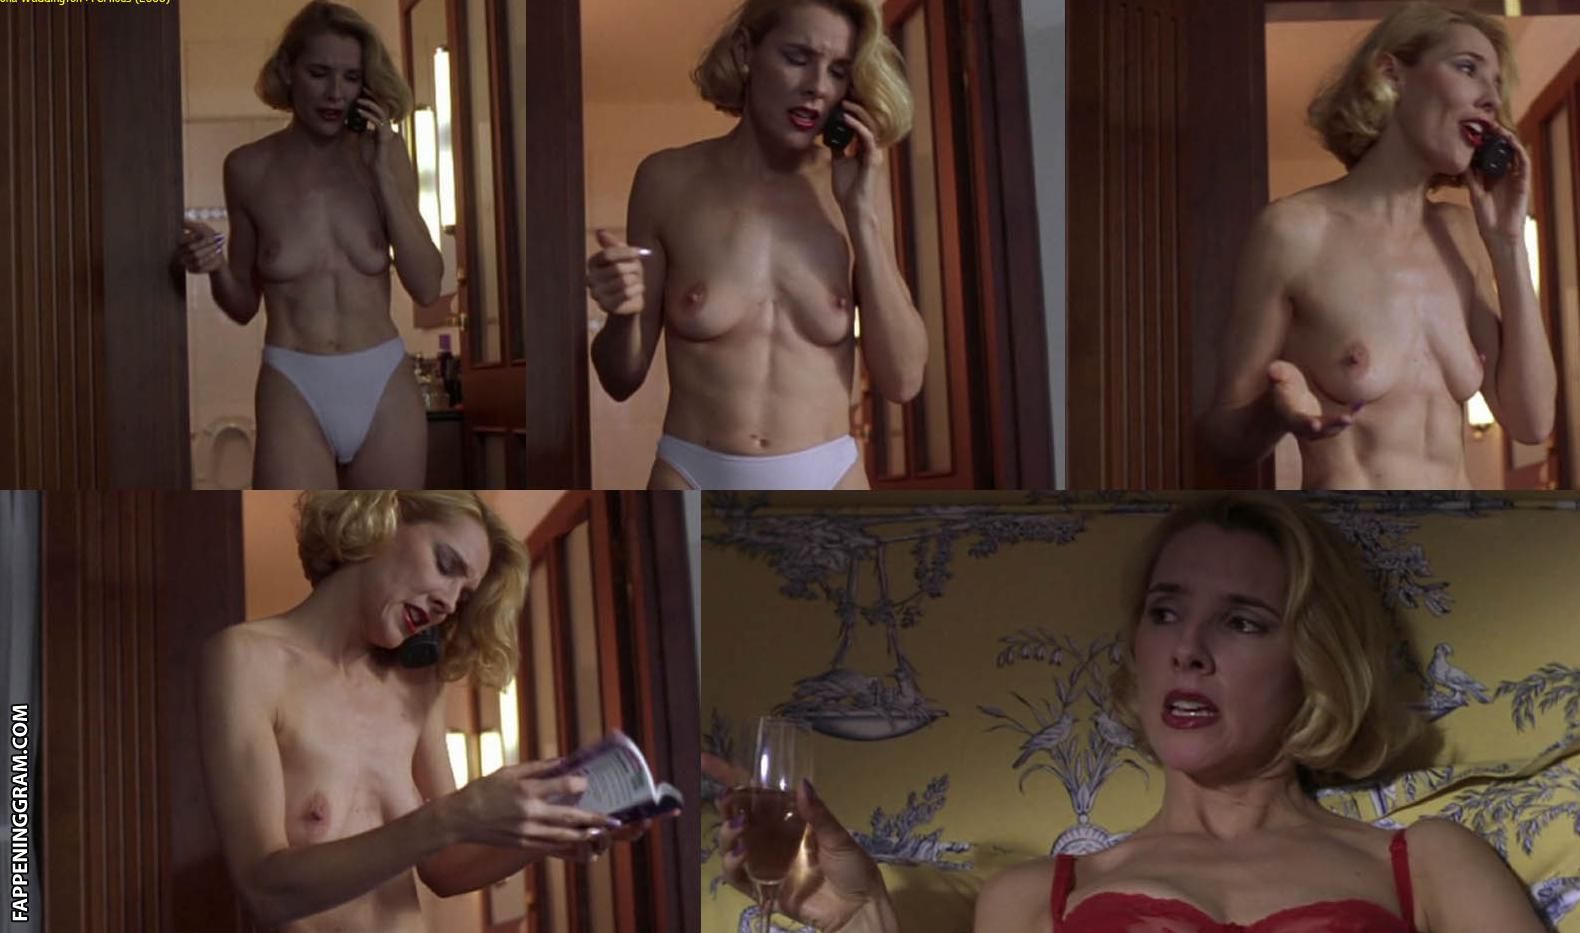 Hanna waddington nude